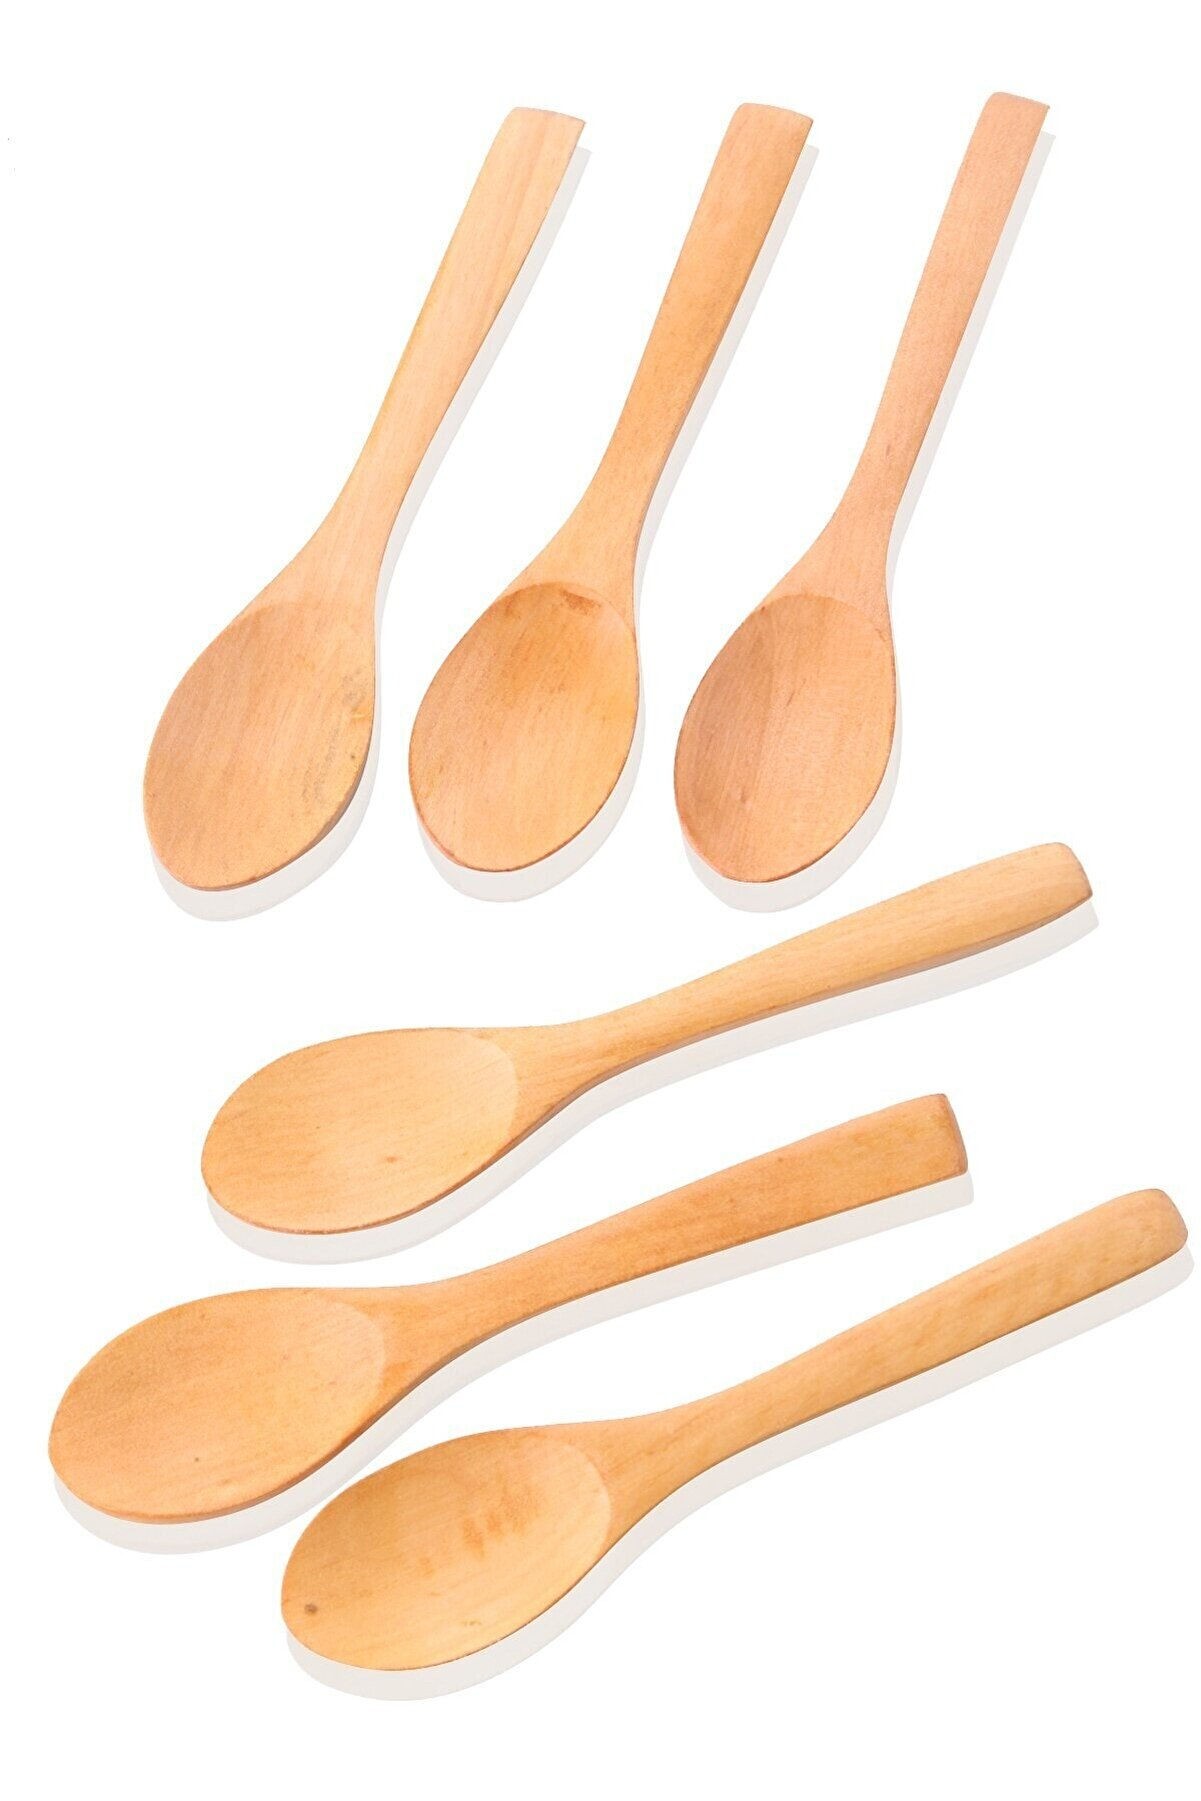 Spoon Set (6 Pieces) BLS-01-6B